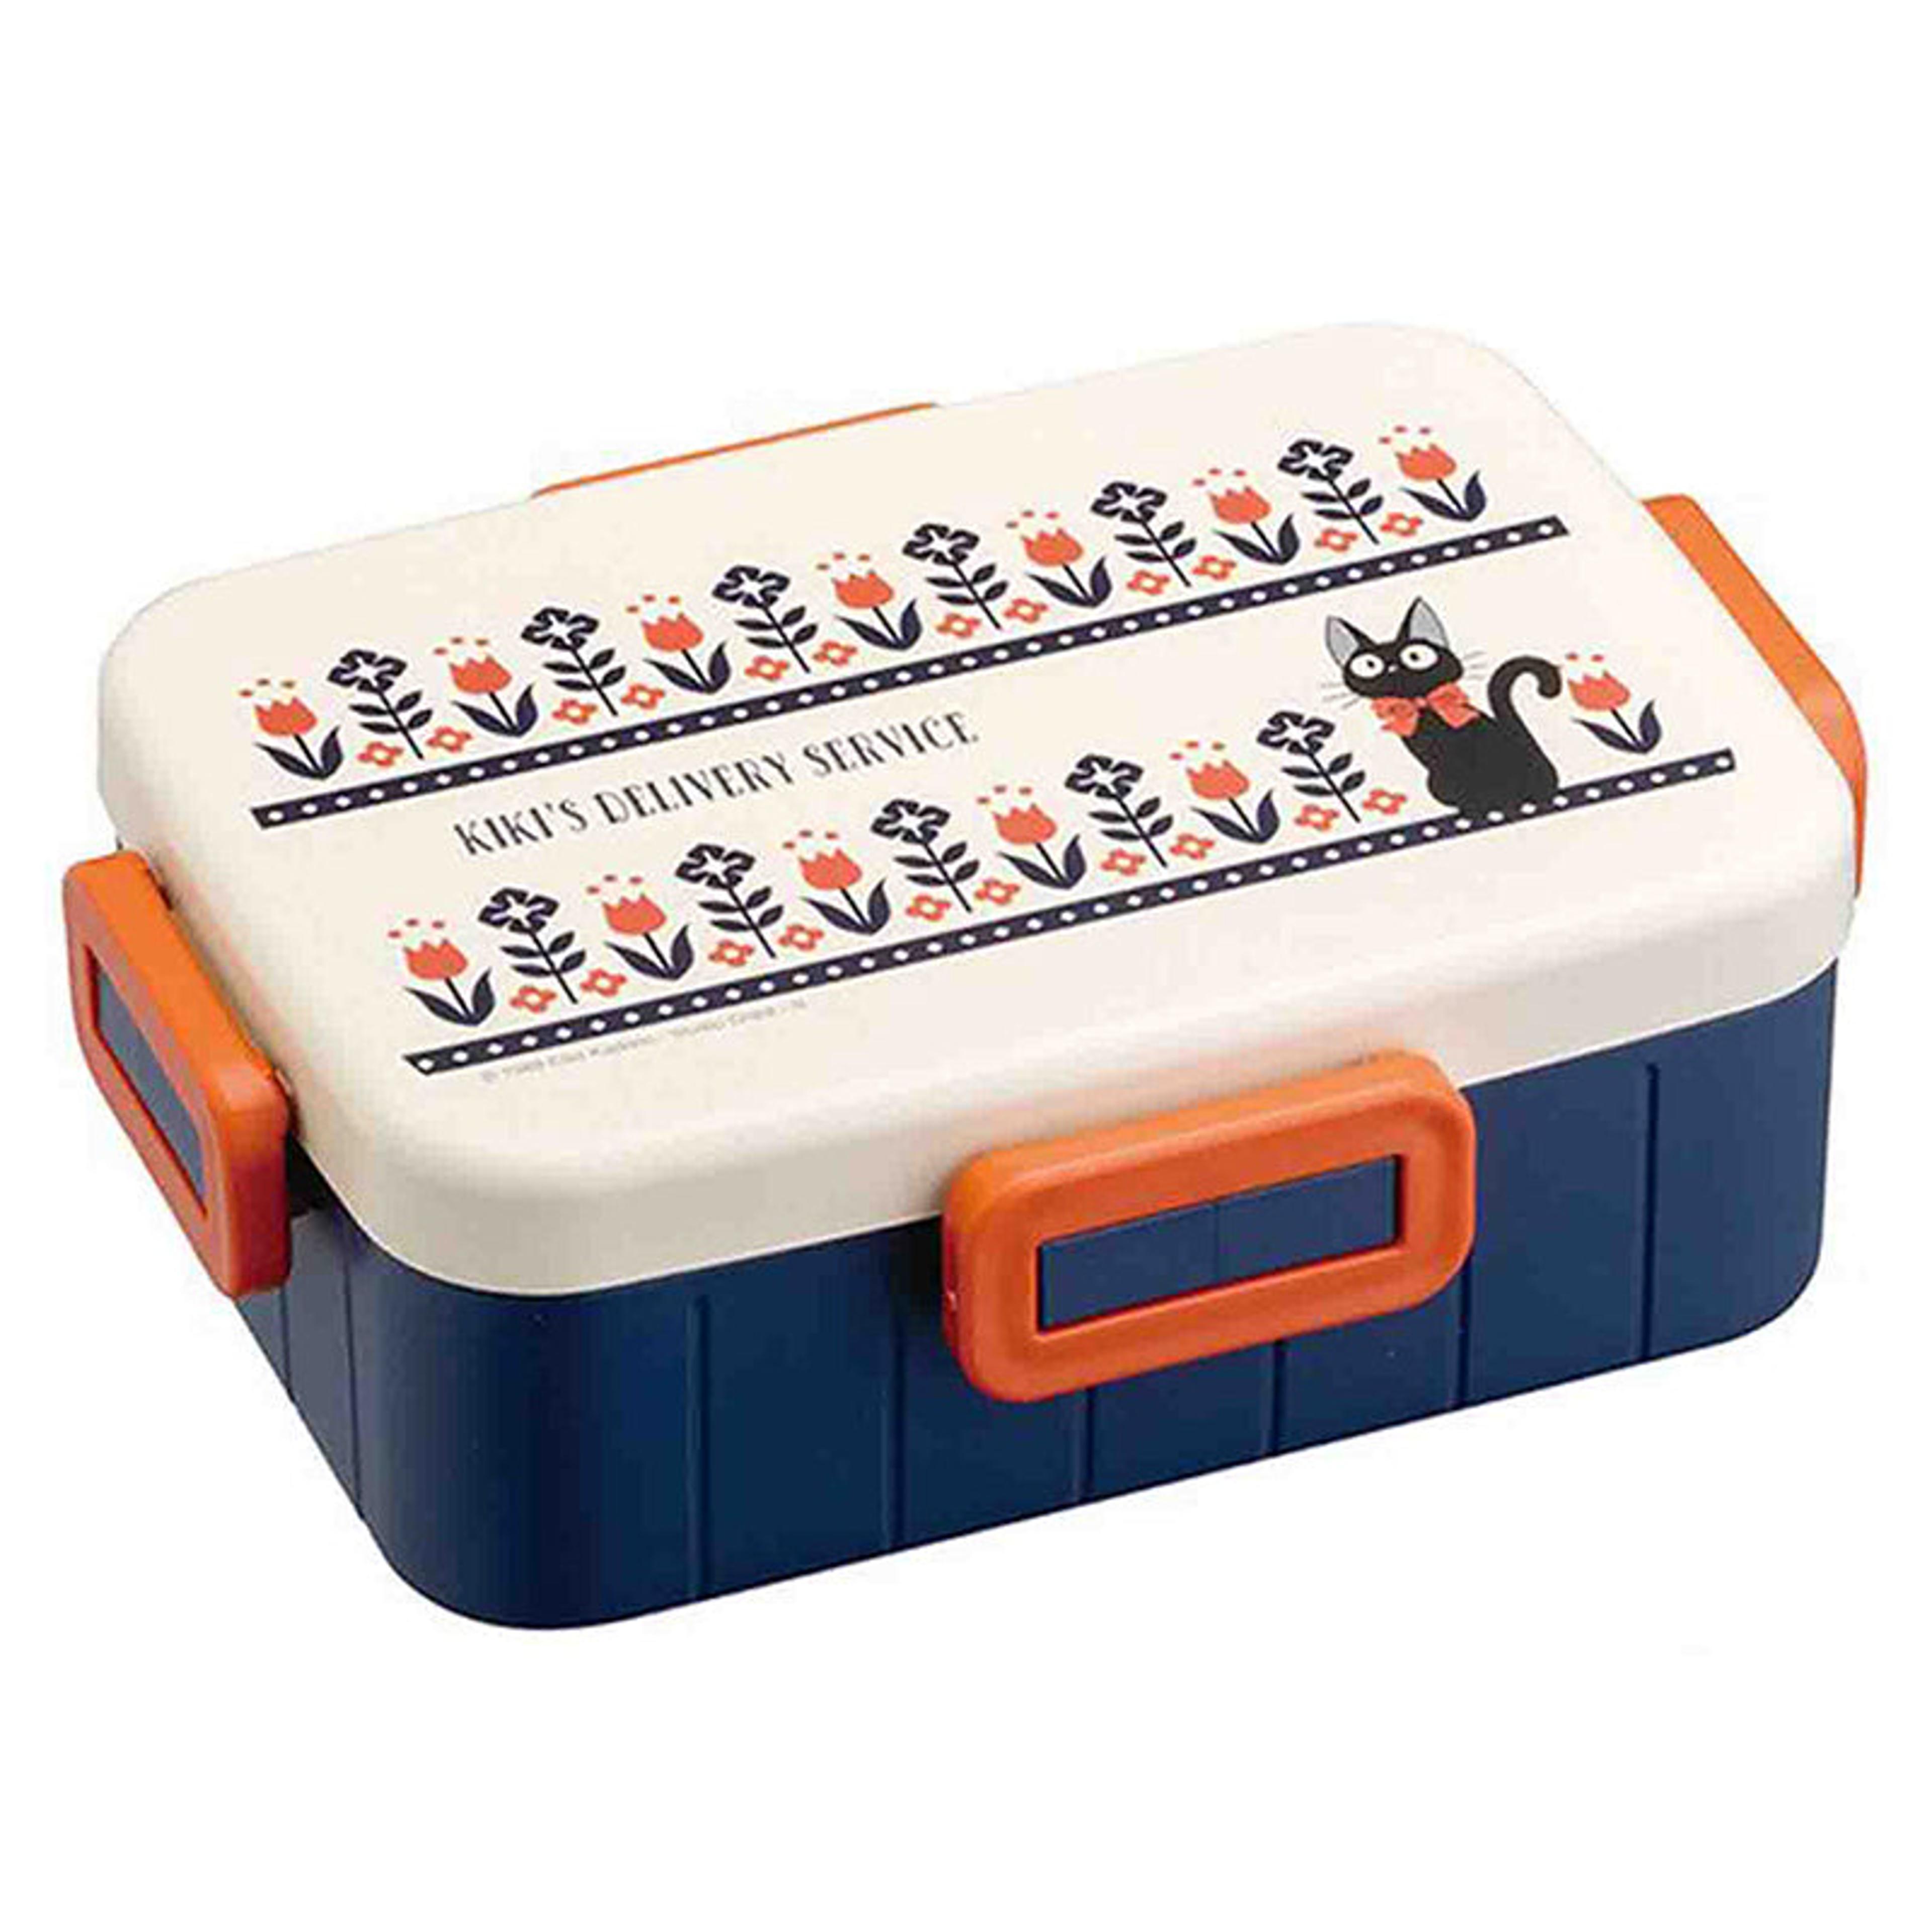 Kiki's Delivery Service Modern Bento Lunch Box